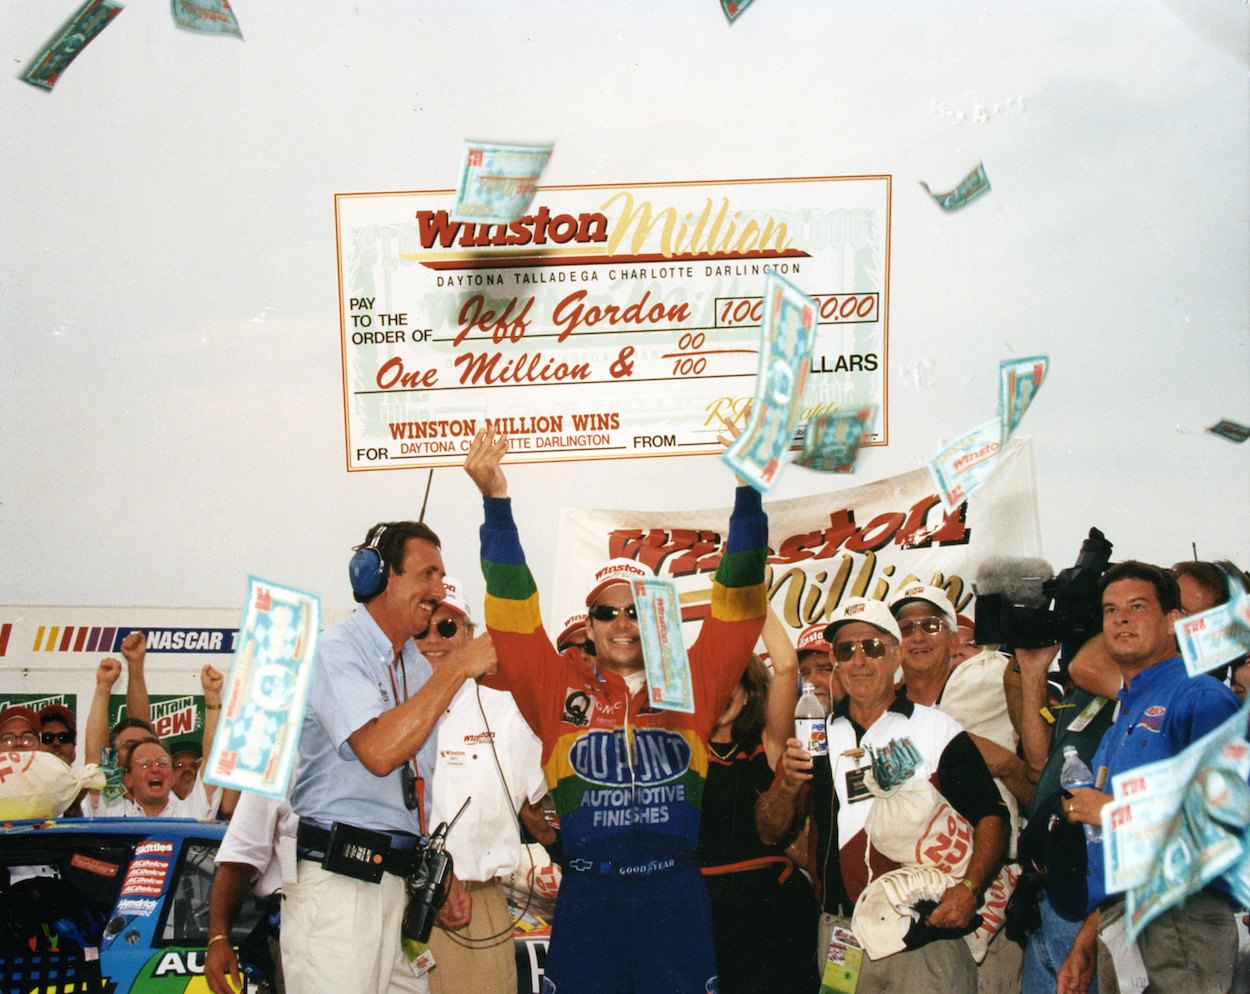 NASCAR legend Jeff Gordon